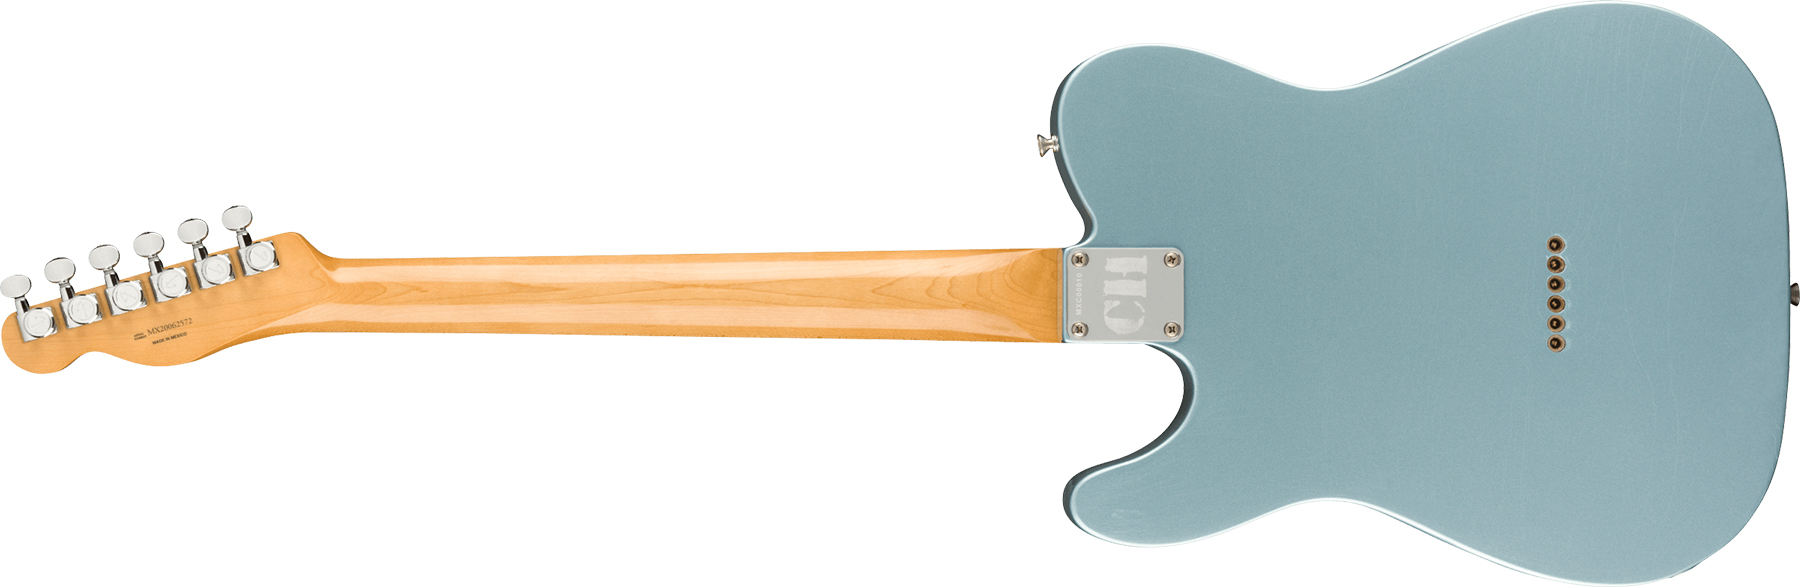 Fender Chrissie Hynde Tele Signature Mex Rw - Road Worn Faded Ice Blue Metallic - Guitarra eléctrica con forma de tel - Variation 1